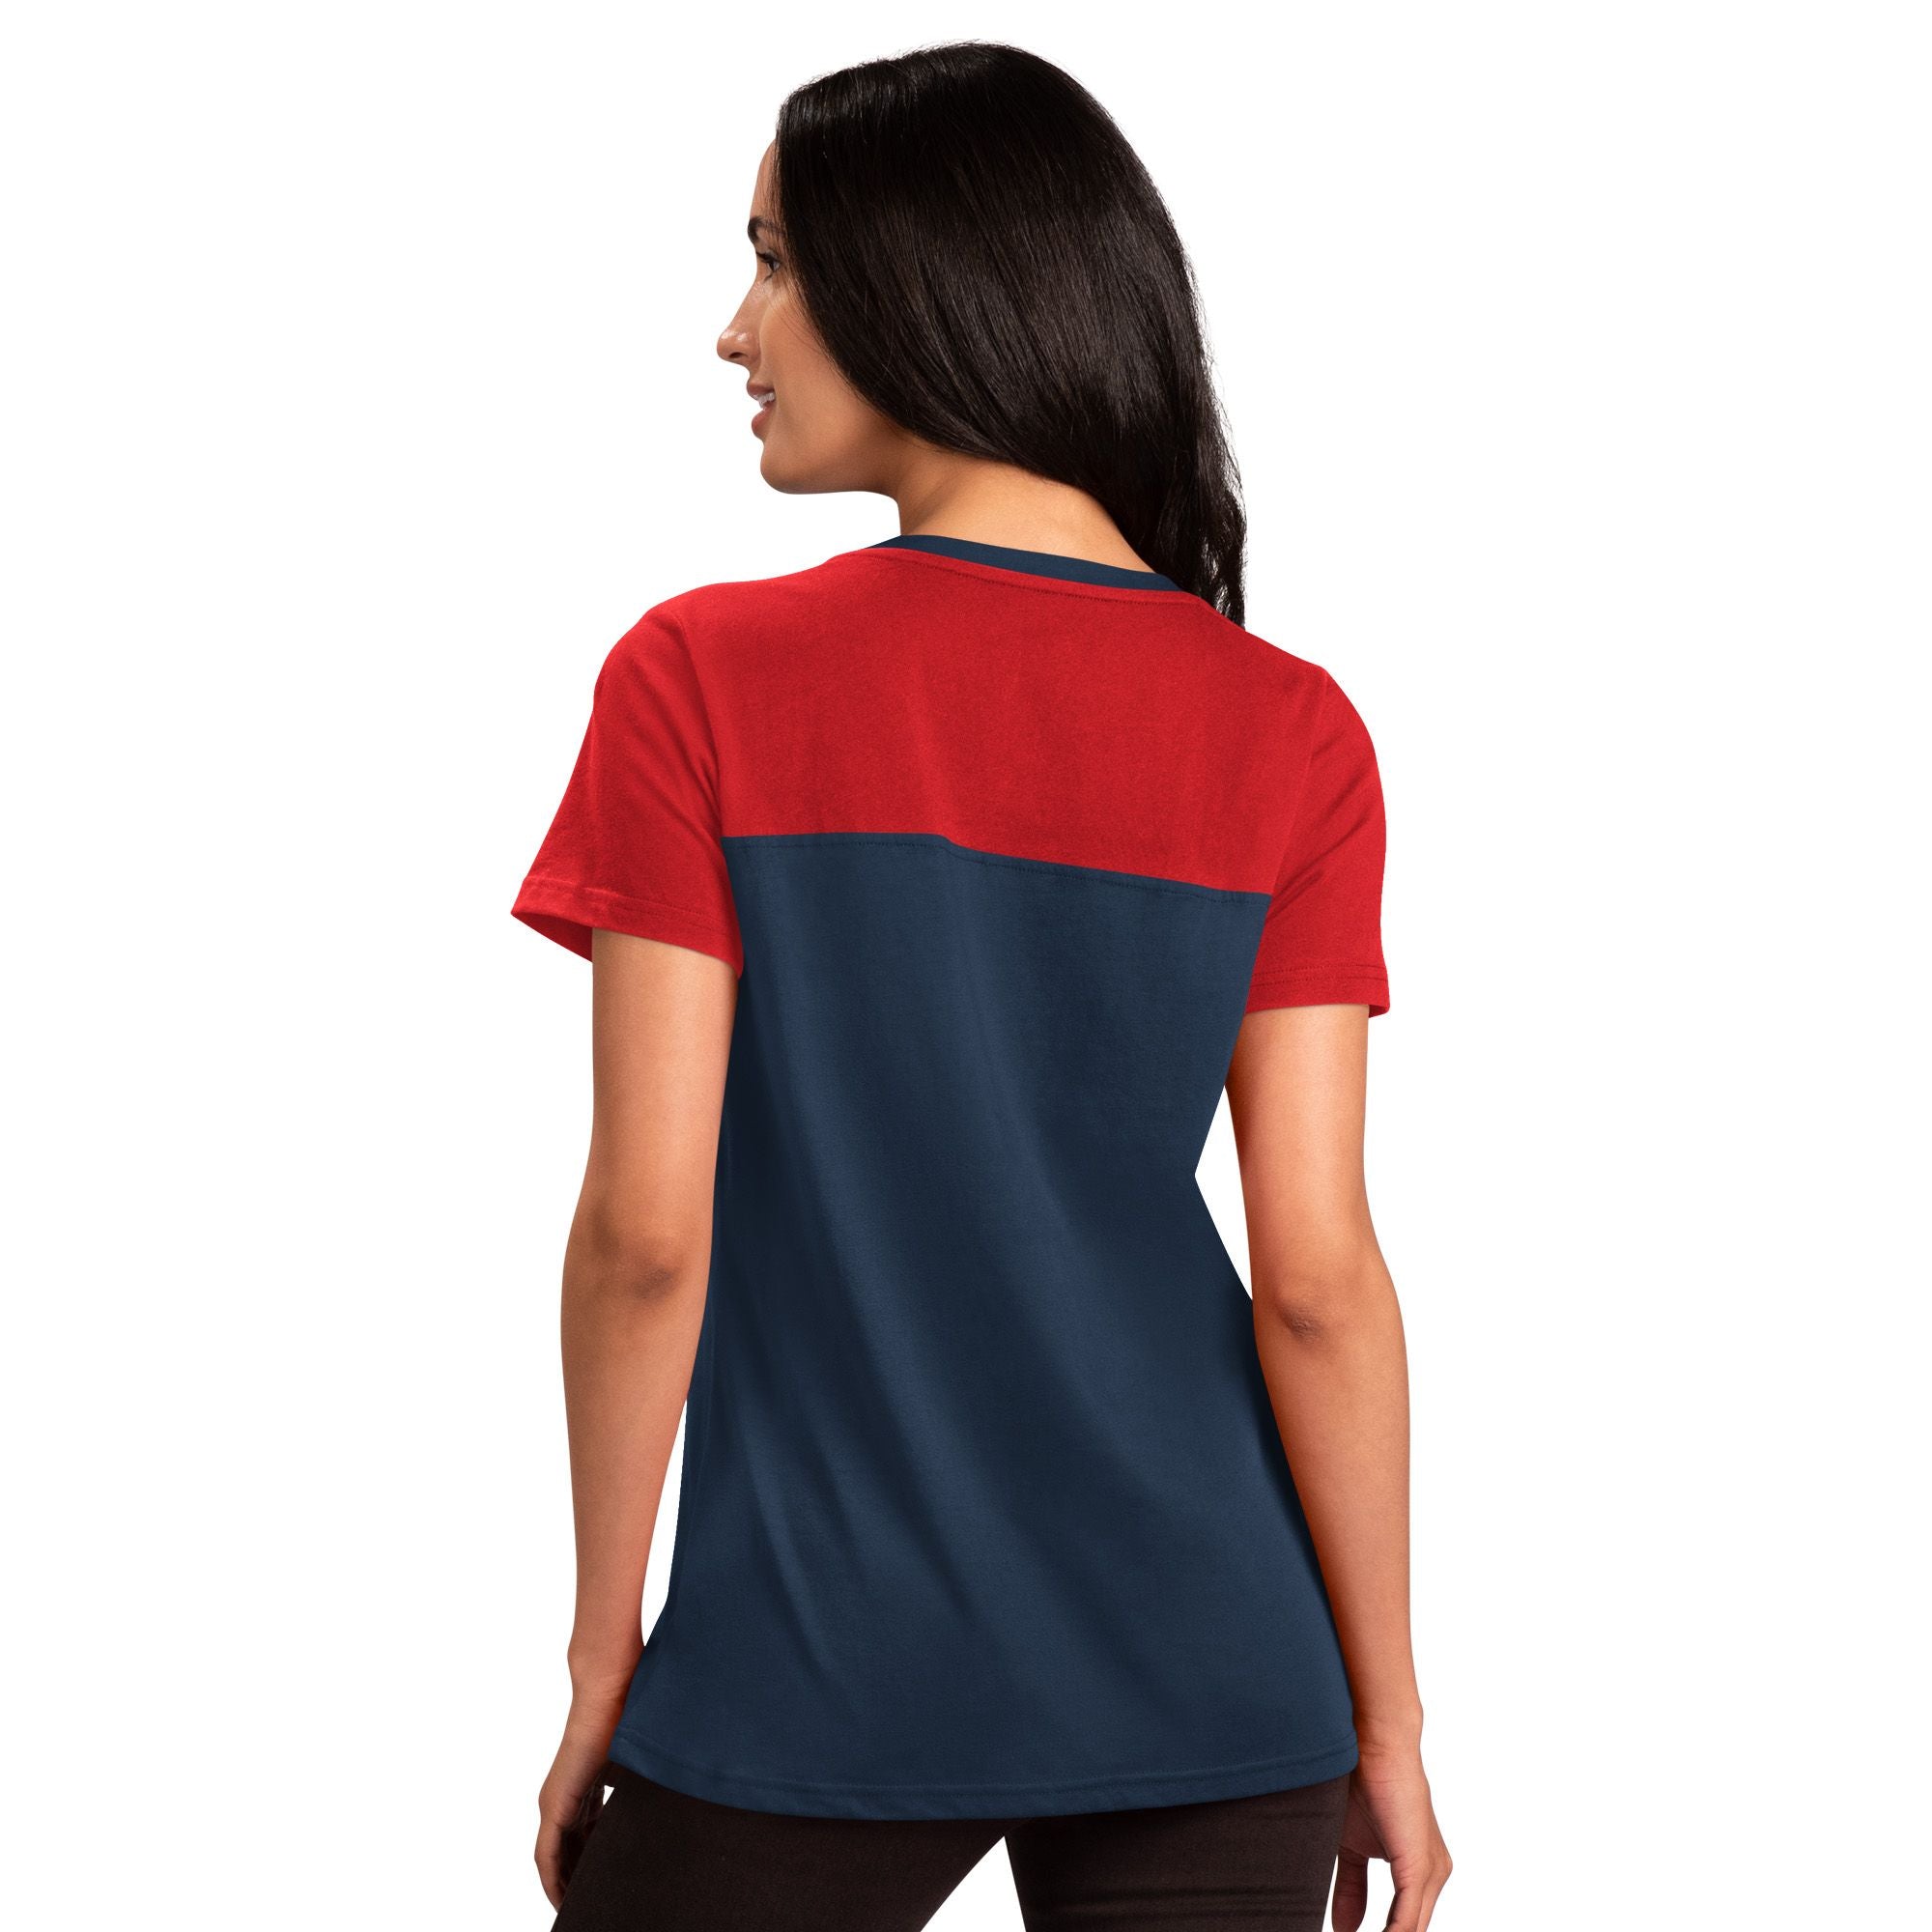 Florida Panthers Women's Script Rhinestone Logo T-Shirt - Navy/Red